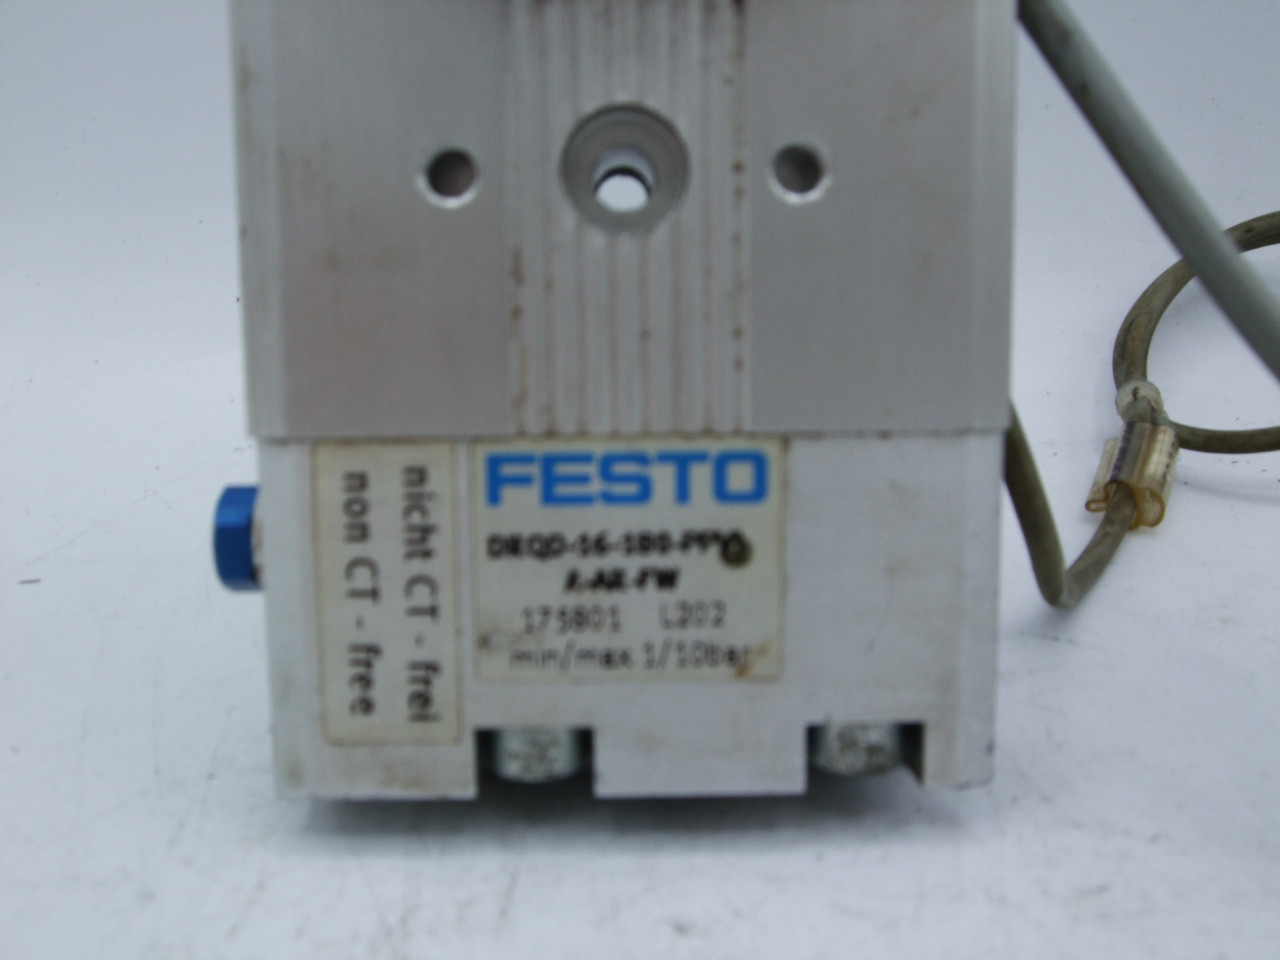 Festo DRQD-16-180-PPVI A-AR-FW Rotary Actuator